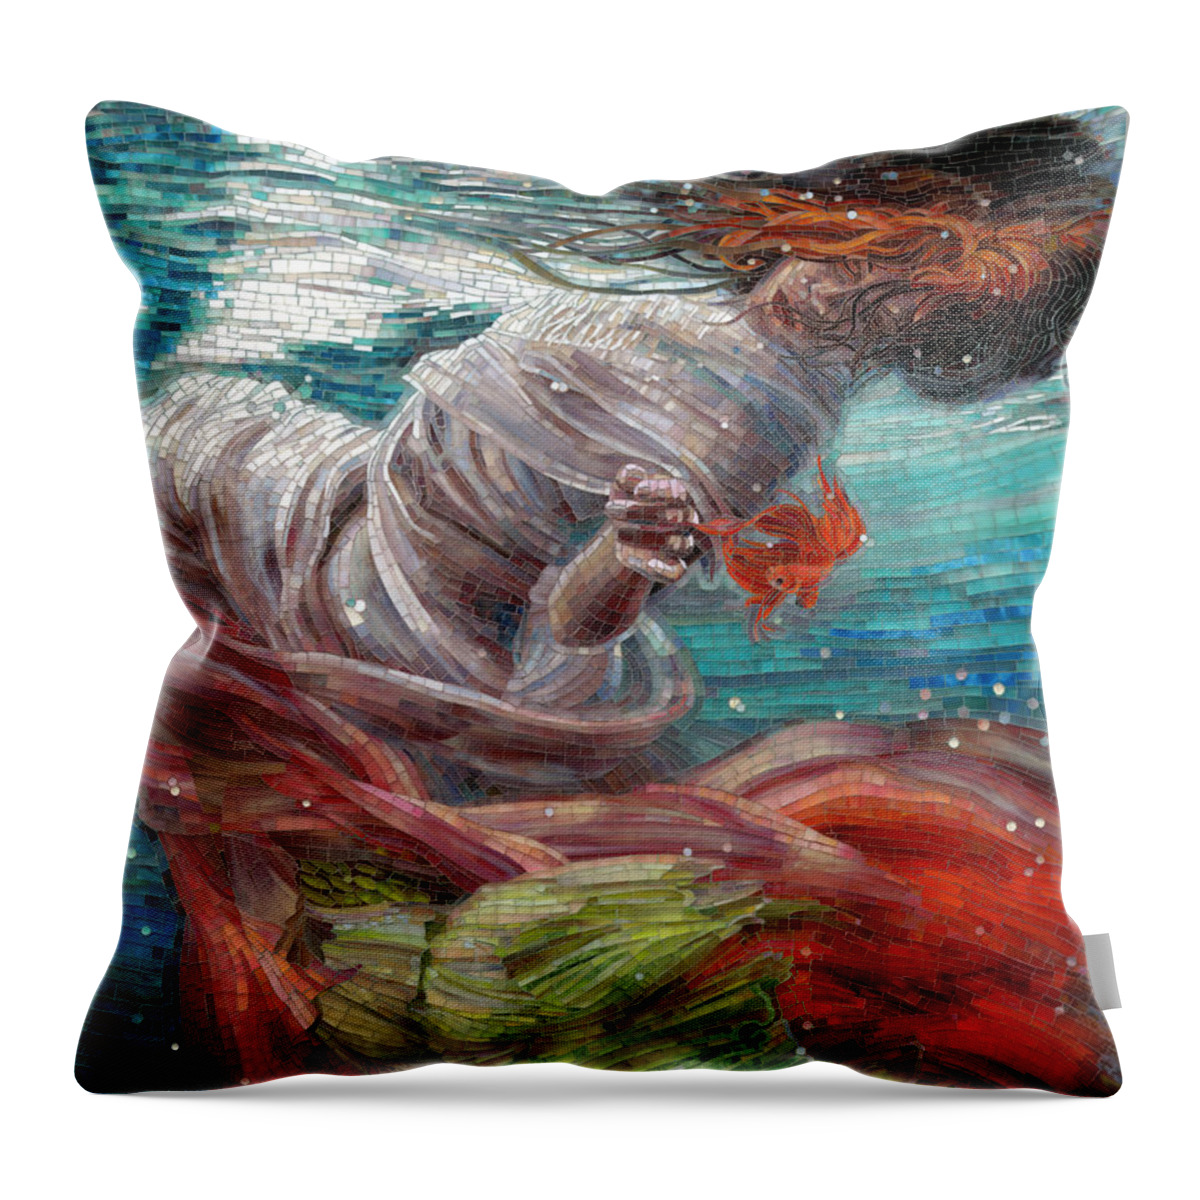 Mermaid Throw Pillow featuring the painting Batyam by Mia Tavonatti